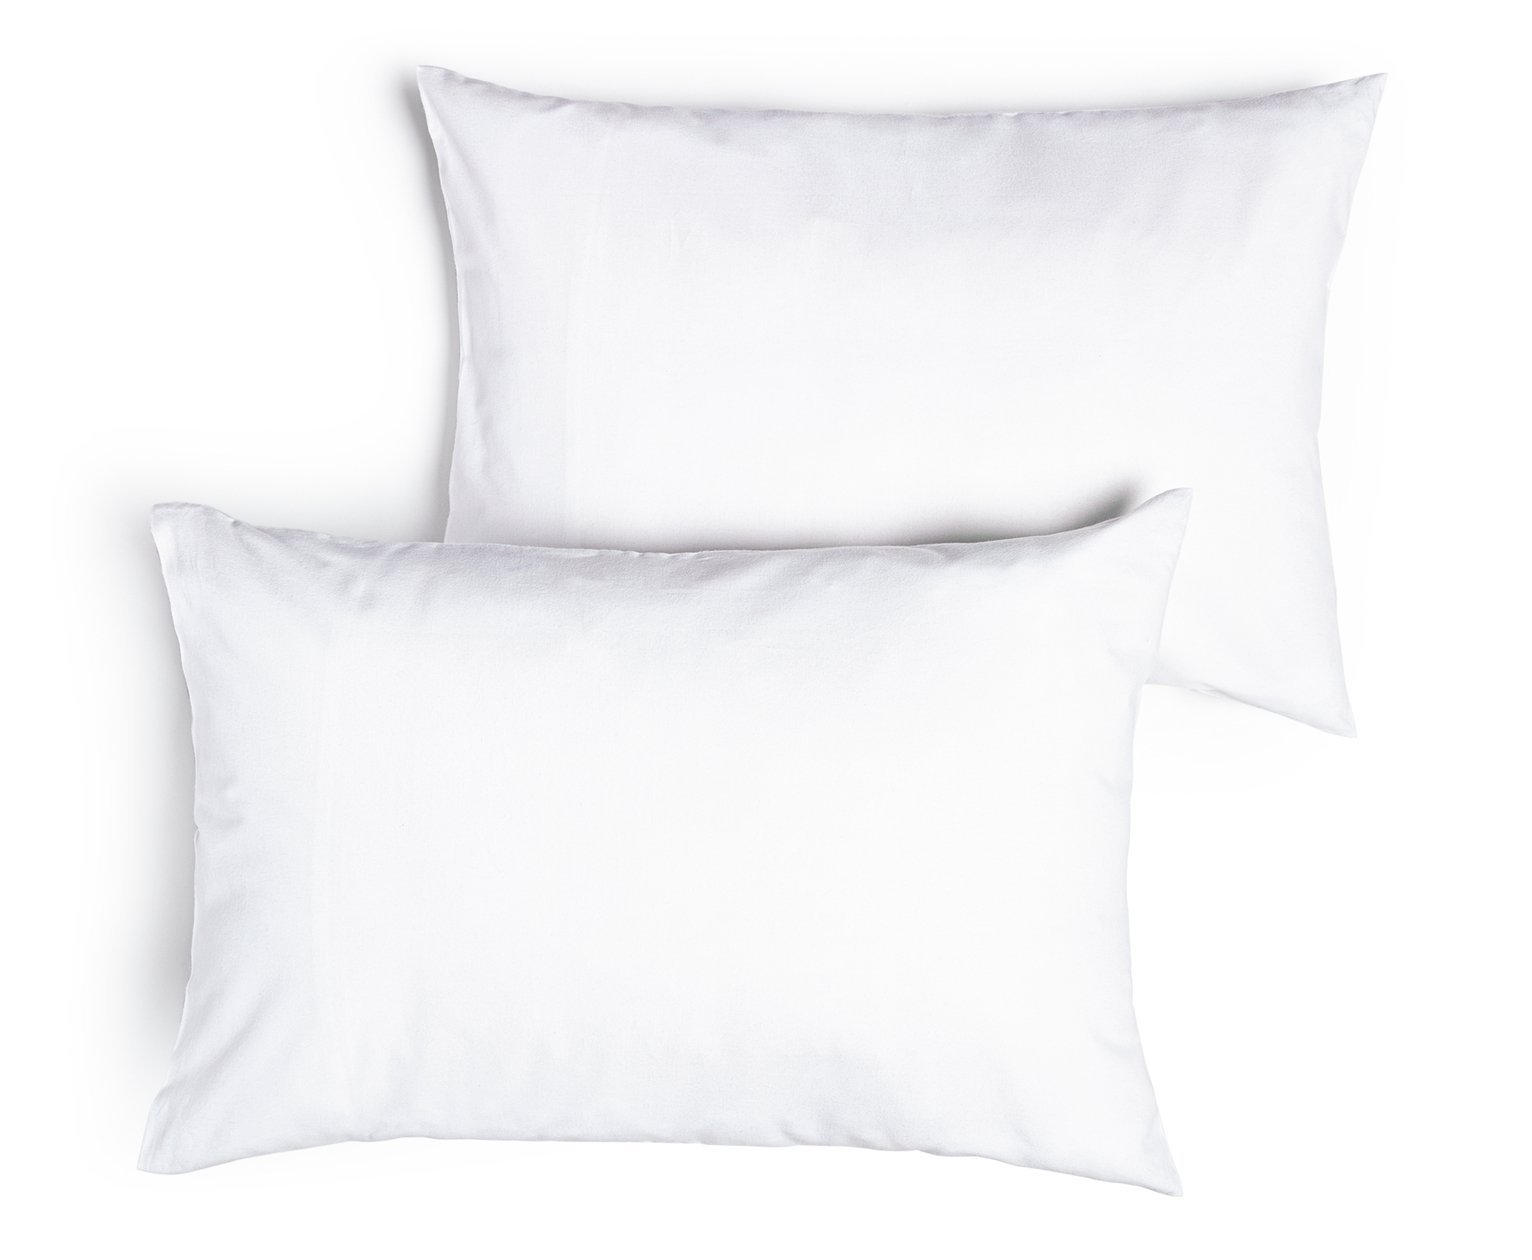 Habitat Egyptian Cotton Standard Pillowcase Pair - White